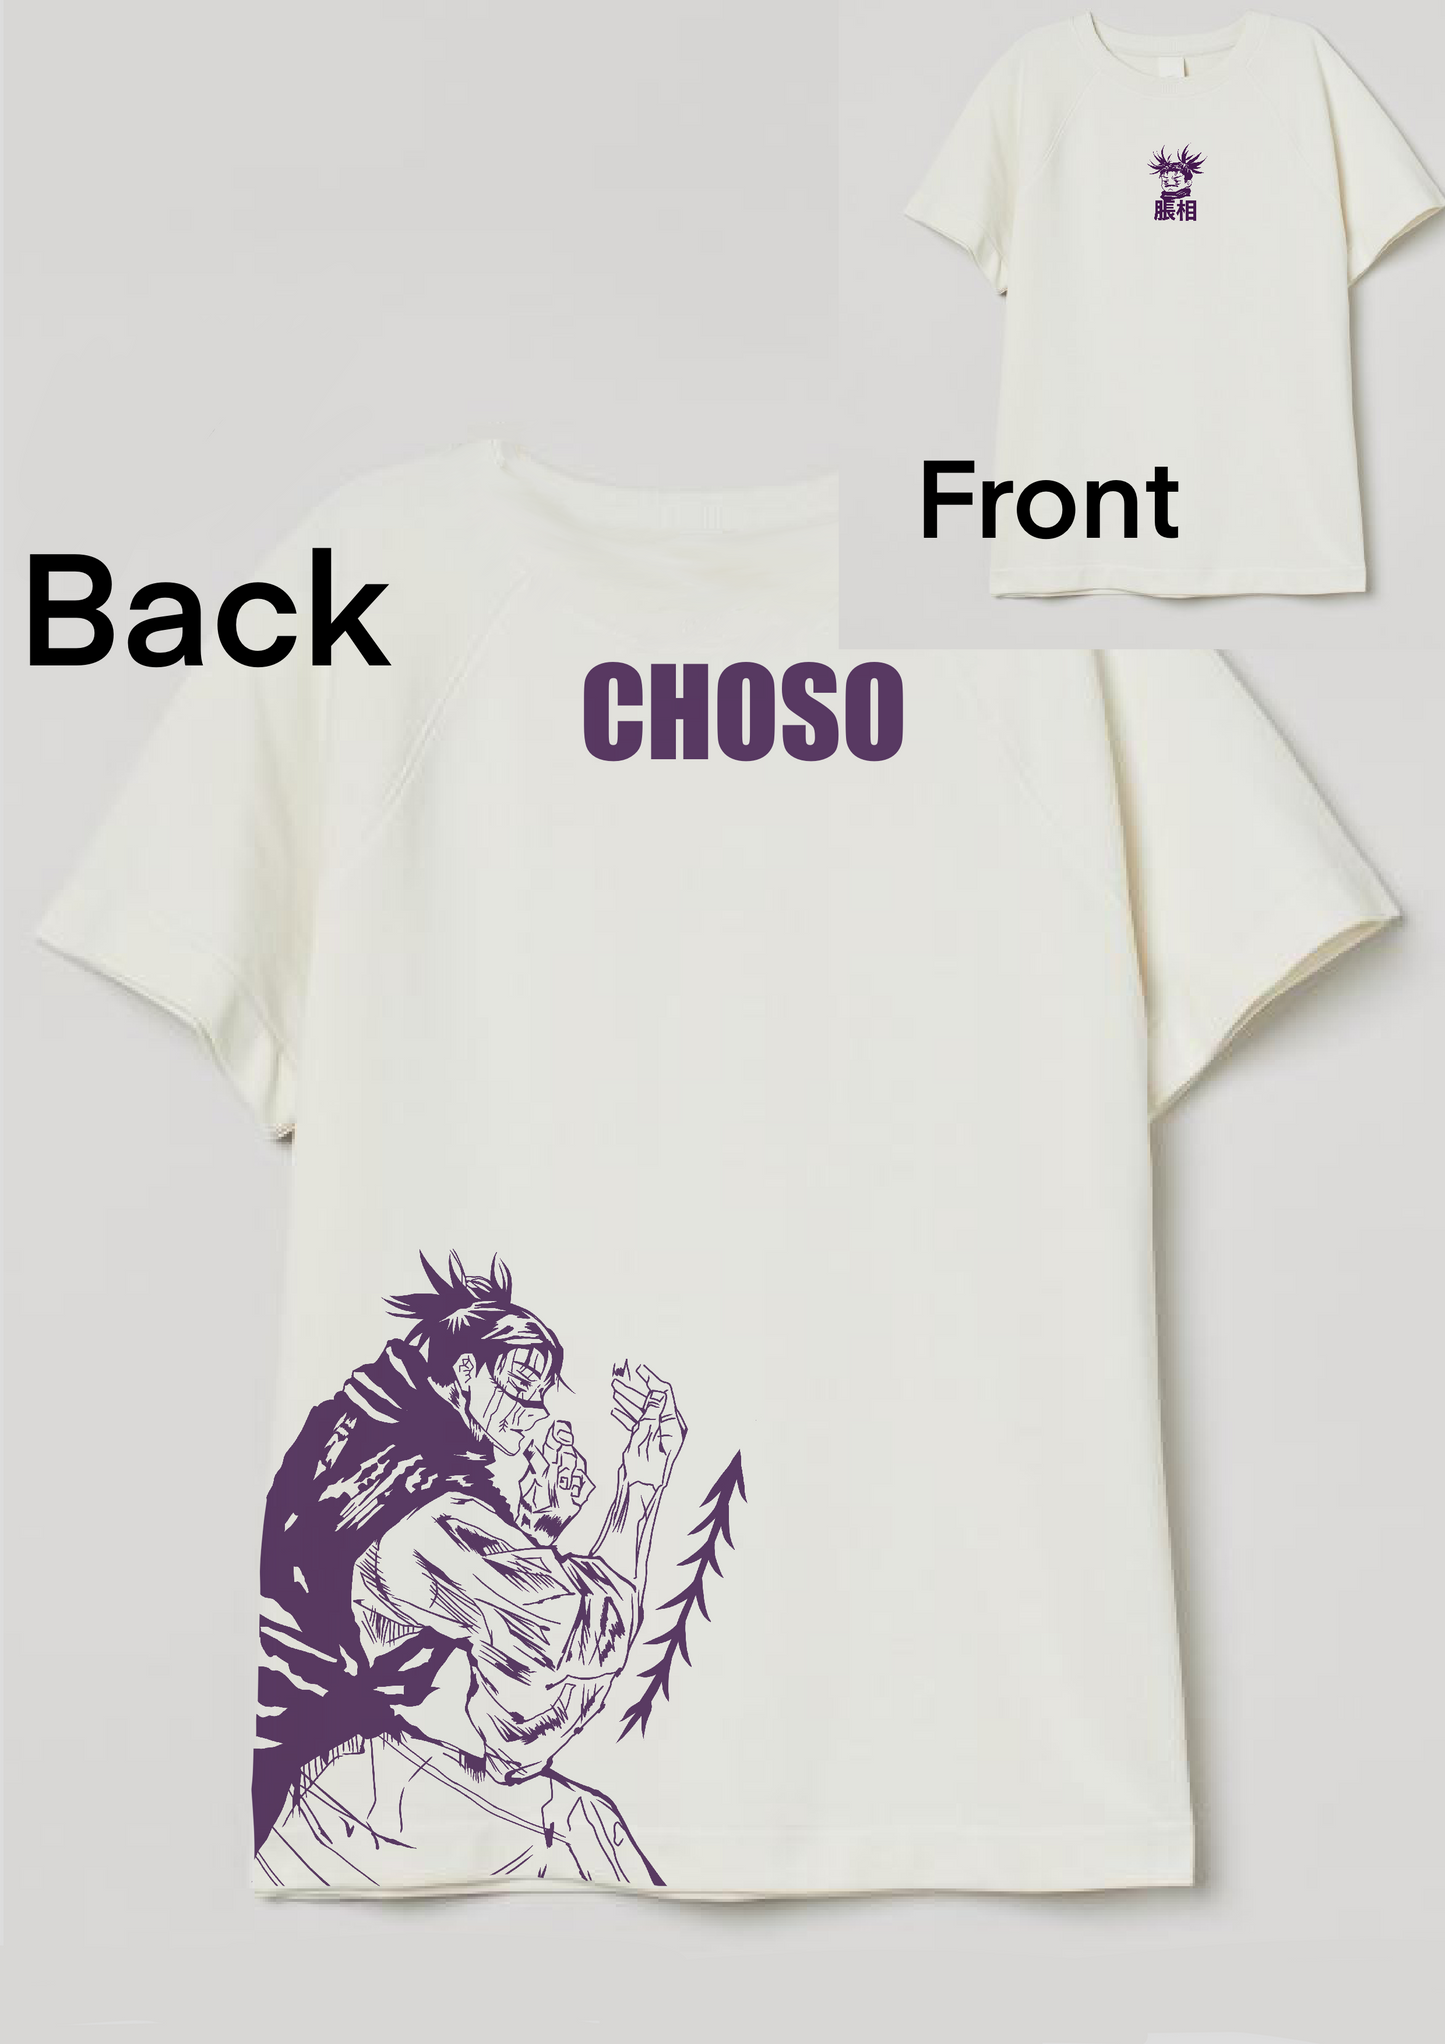 CHOSO Shirt